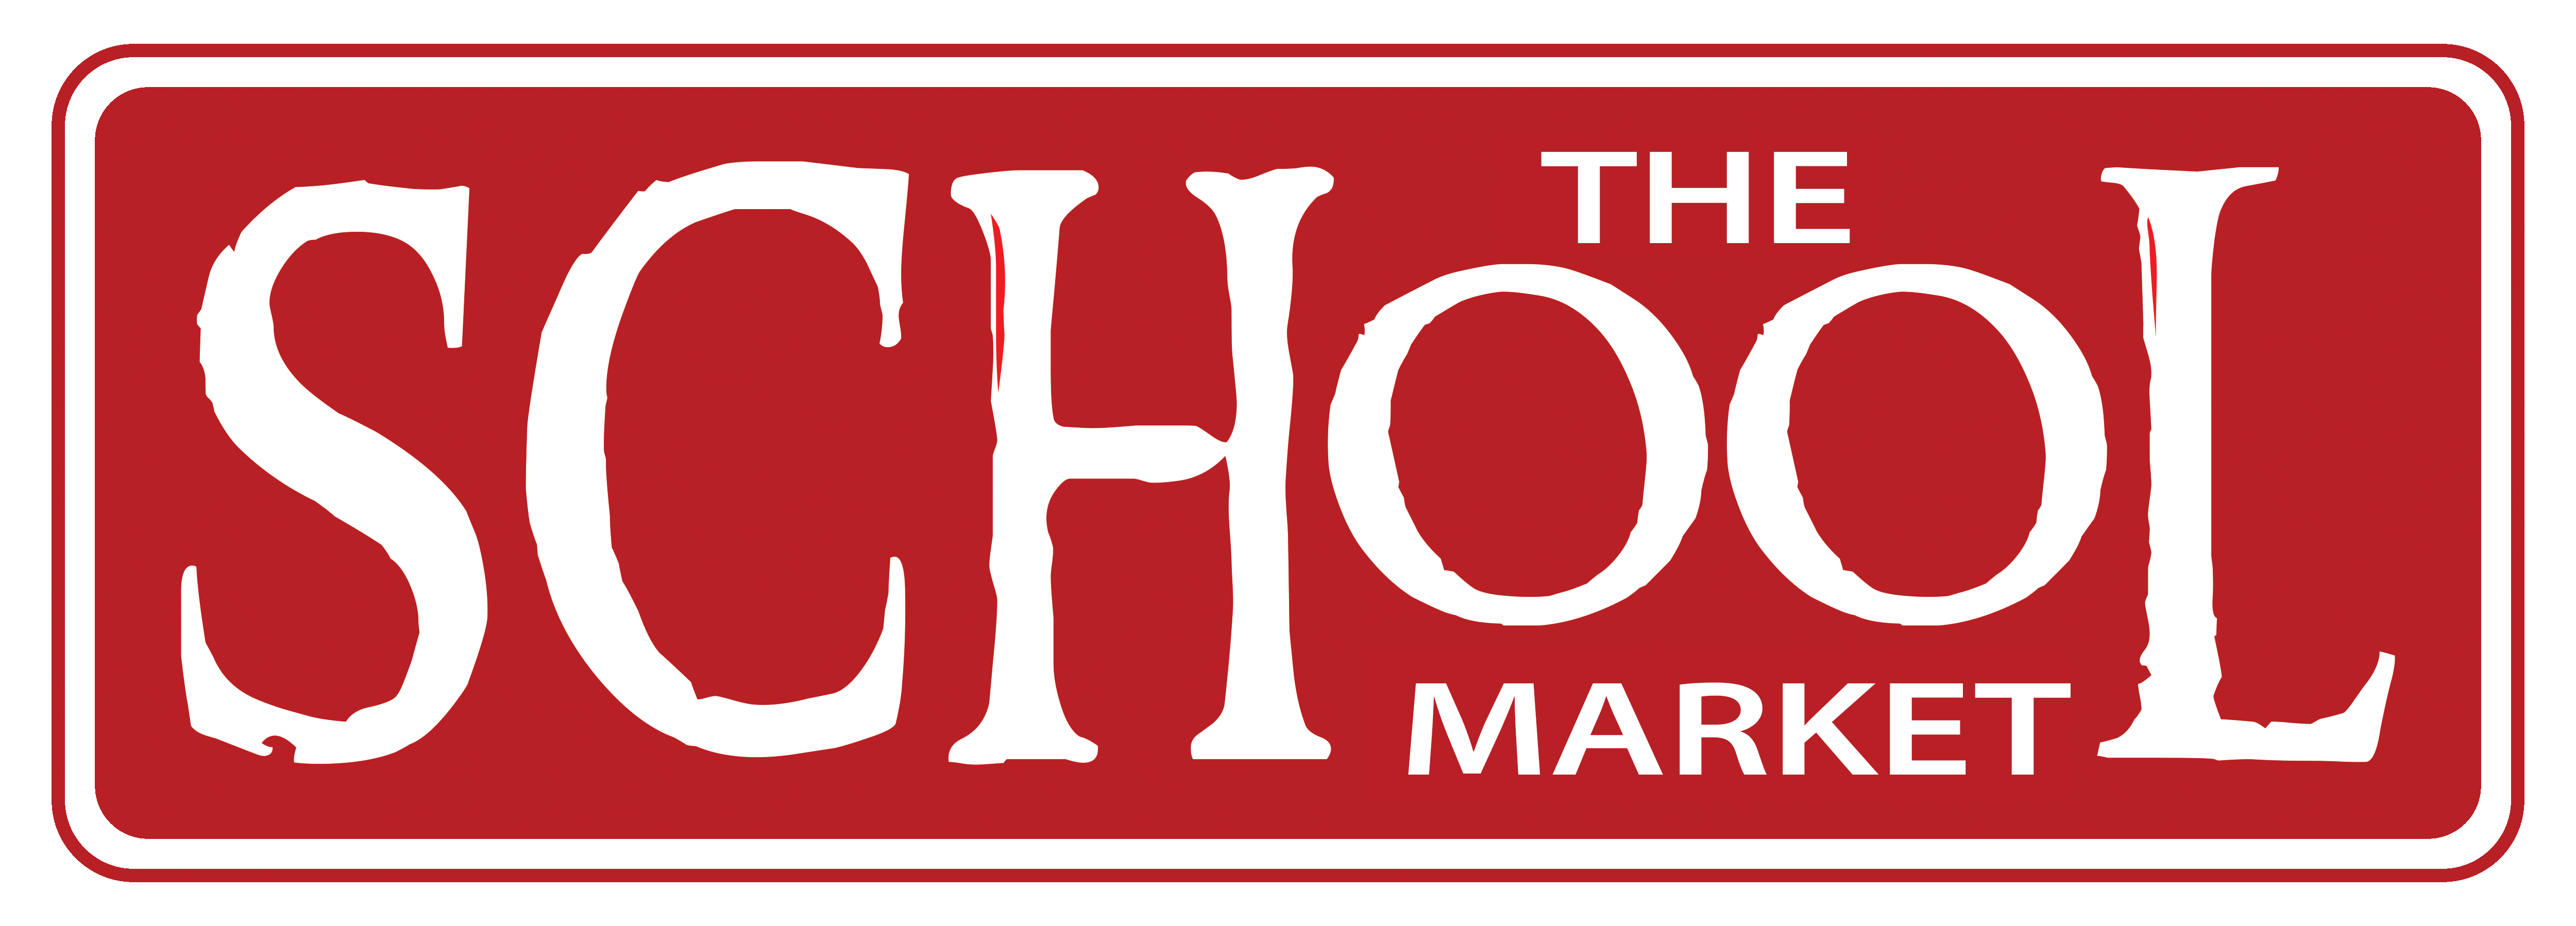 The School Market Logo